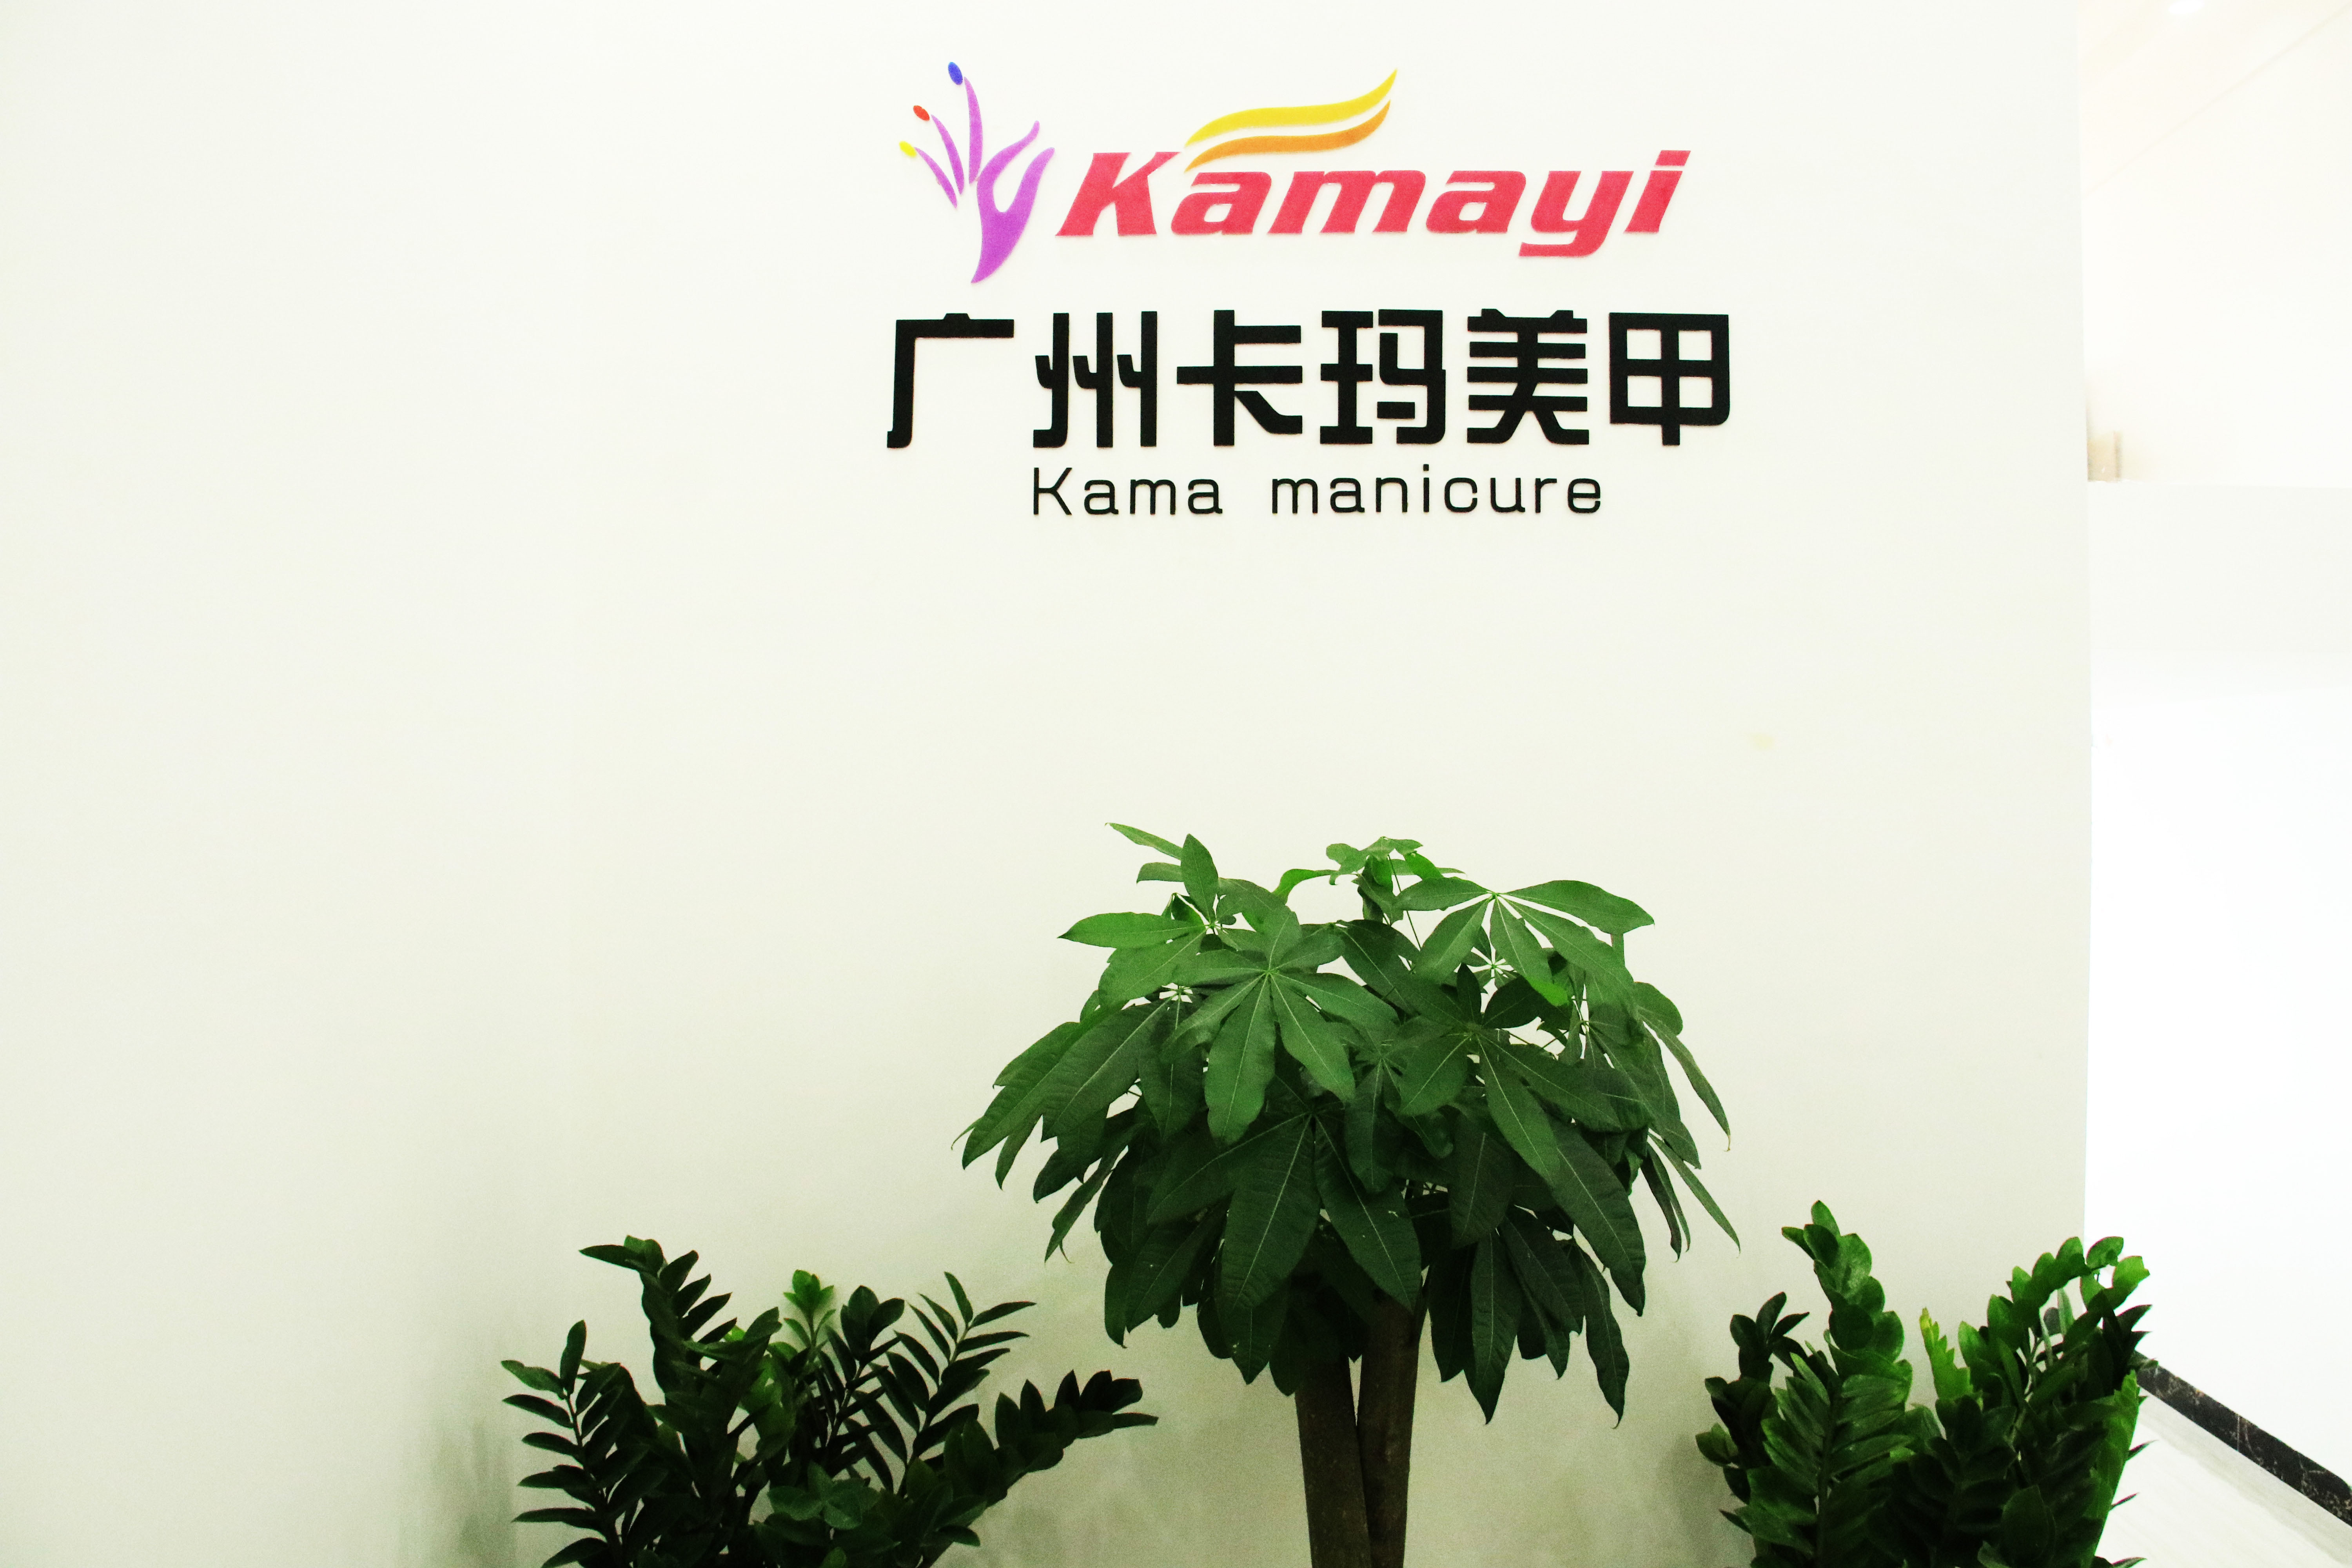 China Guangzhou Kama Manicure Products Ltd. Perfil de la compañía